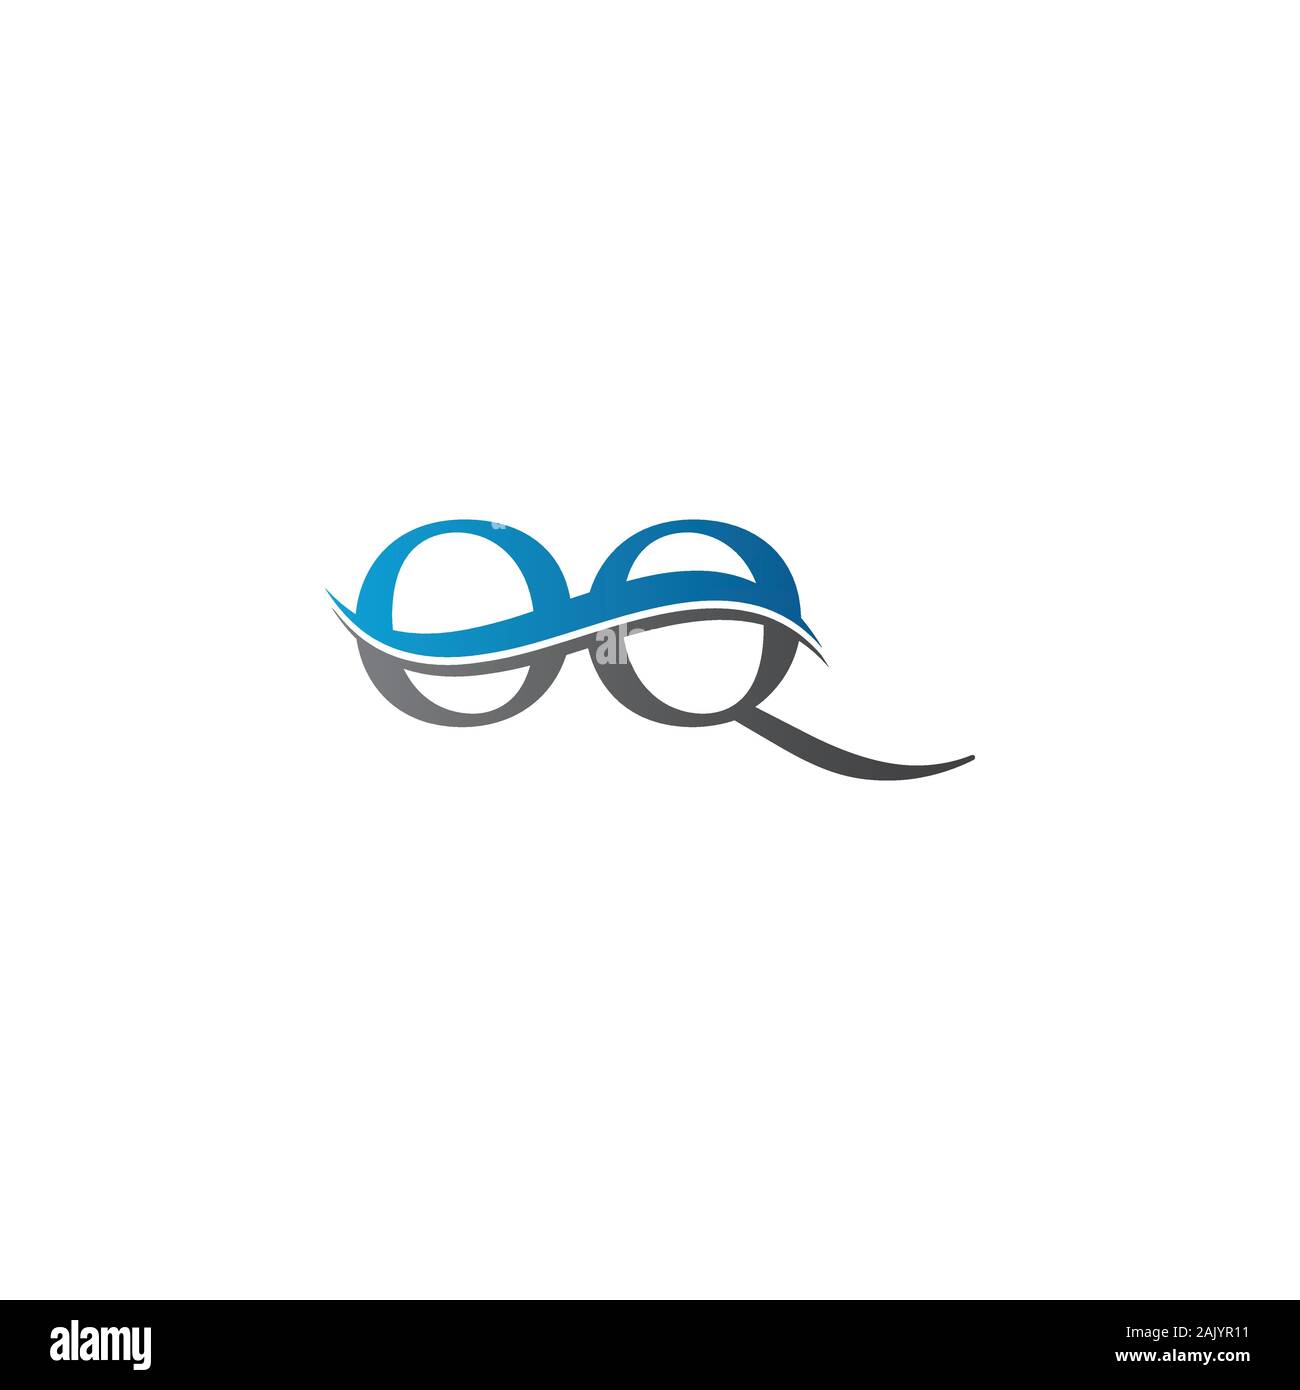 Initial Letter OQ Logo Design Vector Template. OQ Letter Logo Design Stock Vector